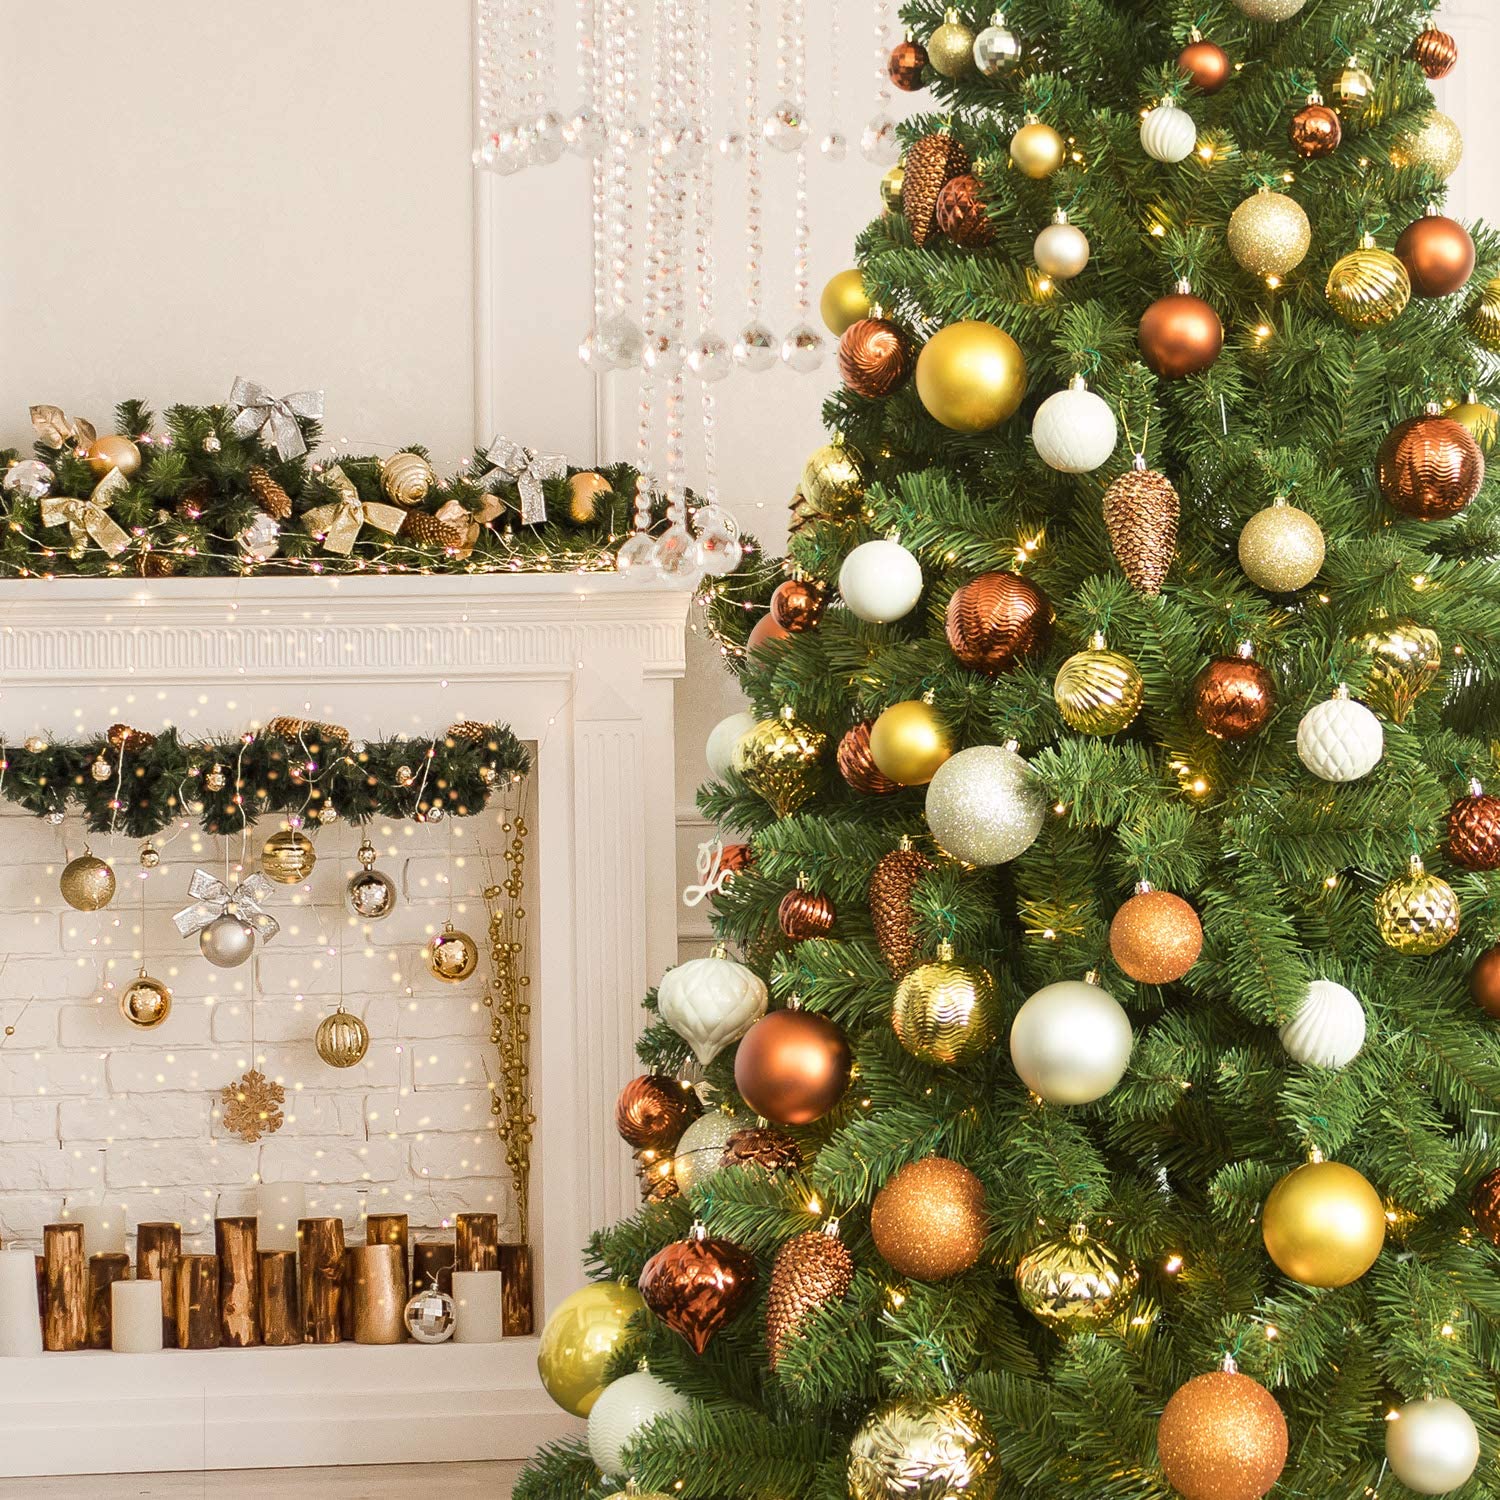 101 Pcs Christmas Balls Tree Ornaments, Shatterproof Christmas Tree Balls Decorations Set, Star Topper Baubles Hanging Ornaments for Holiday Xmas Tree Decor (Gold)